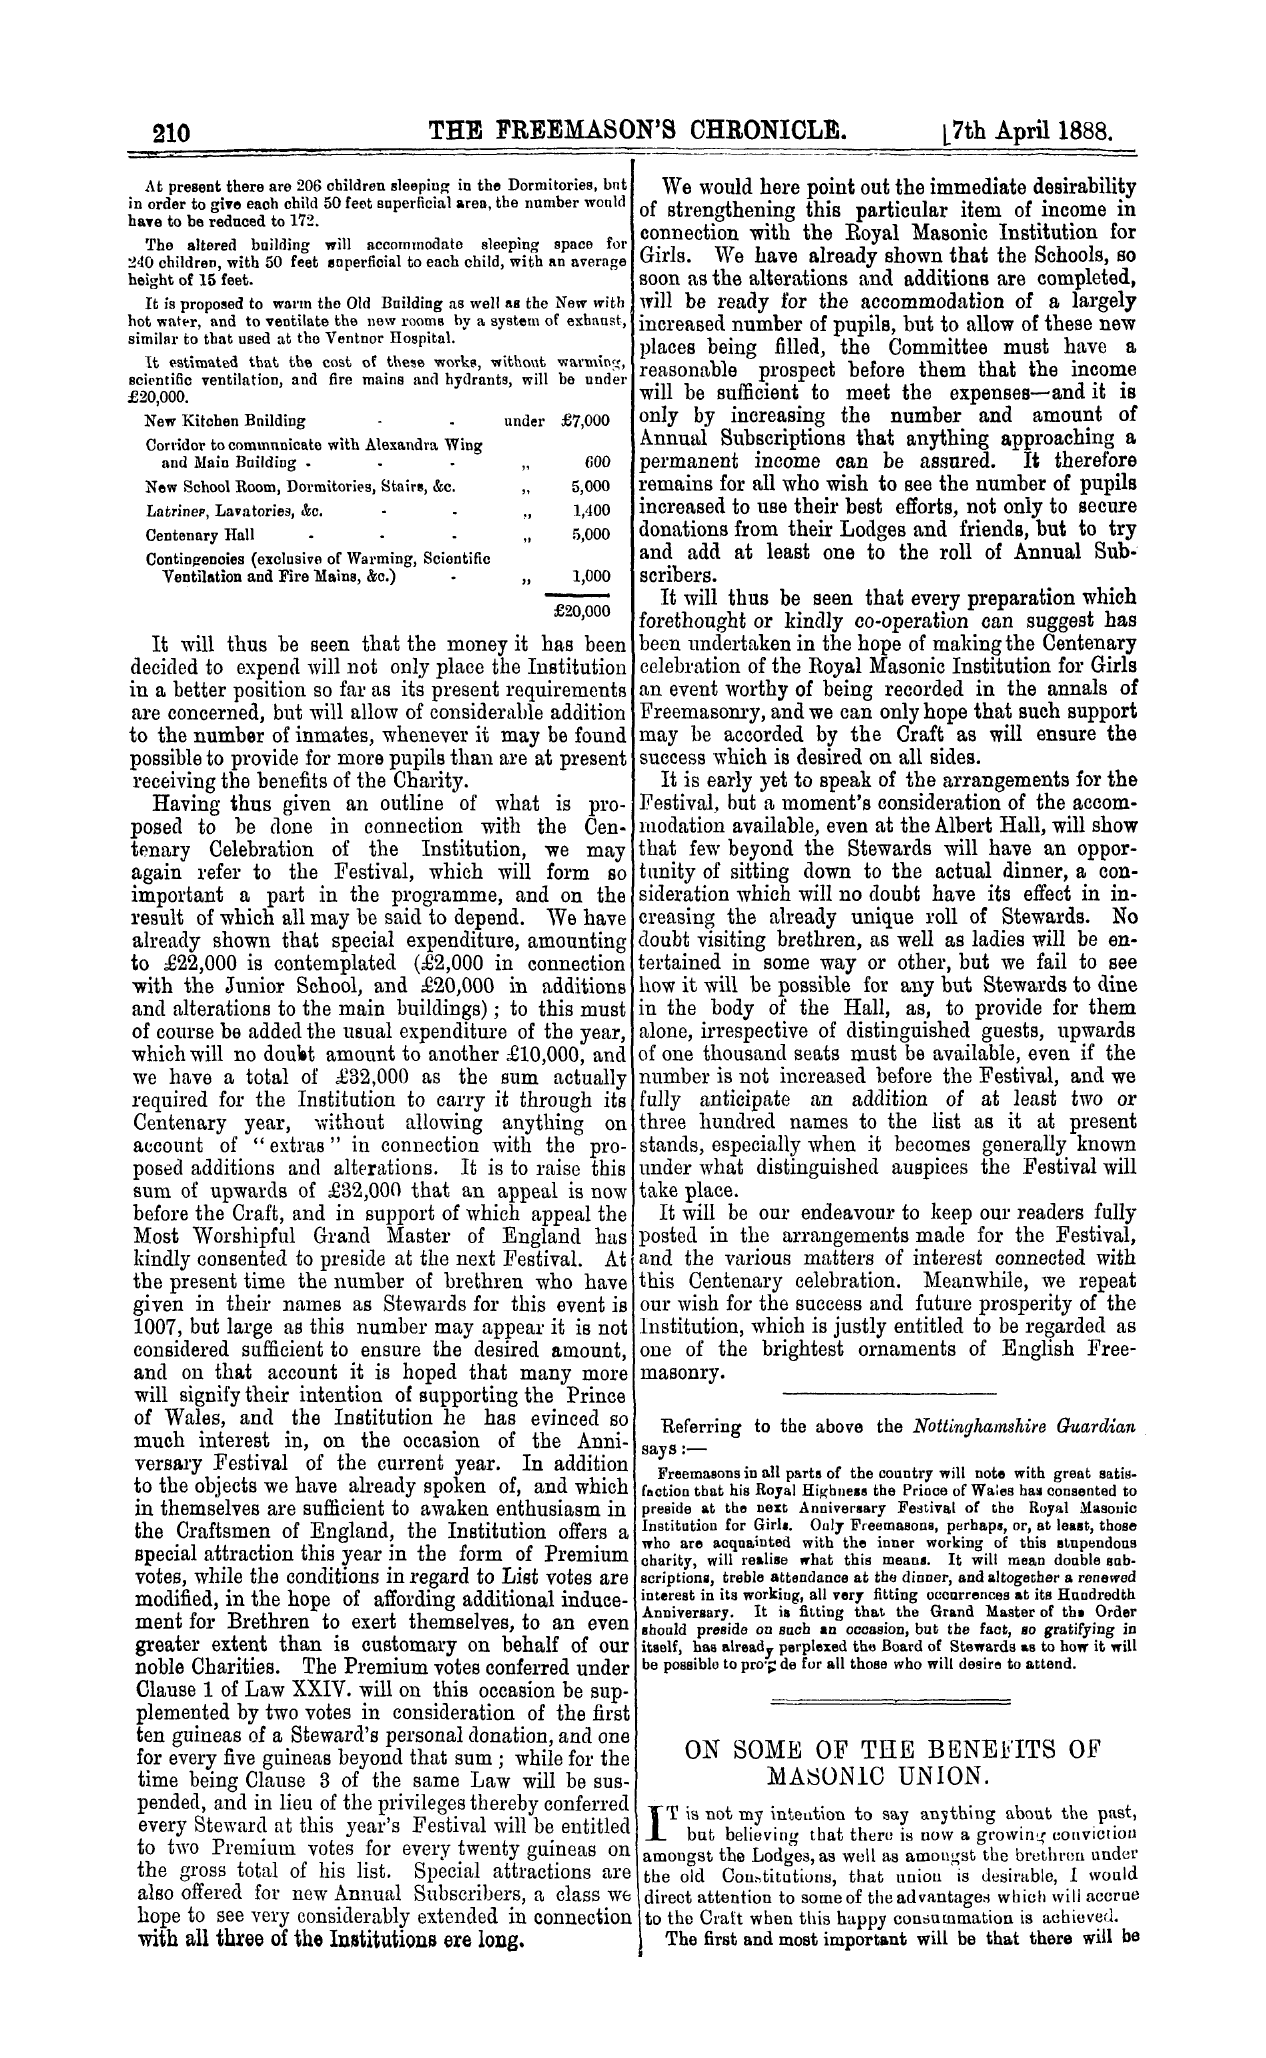 The Freemason's Chronicle: 1888-04-07: 2